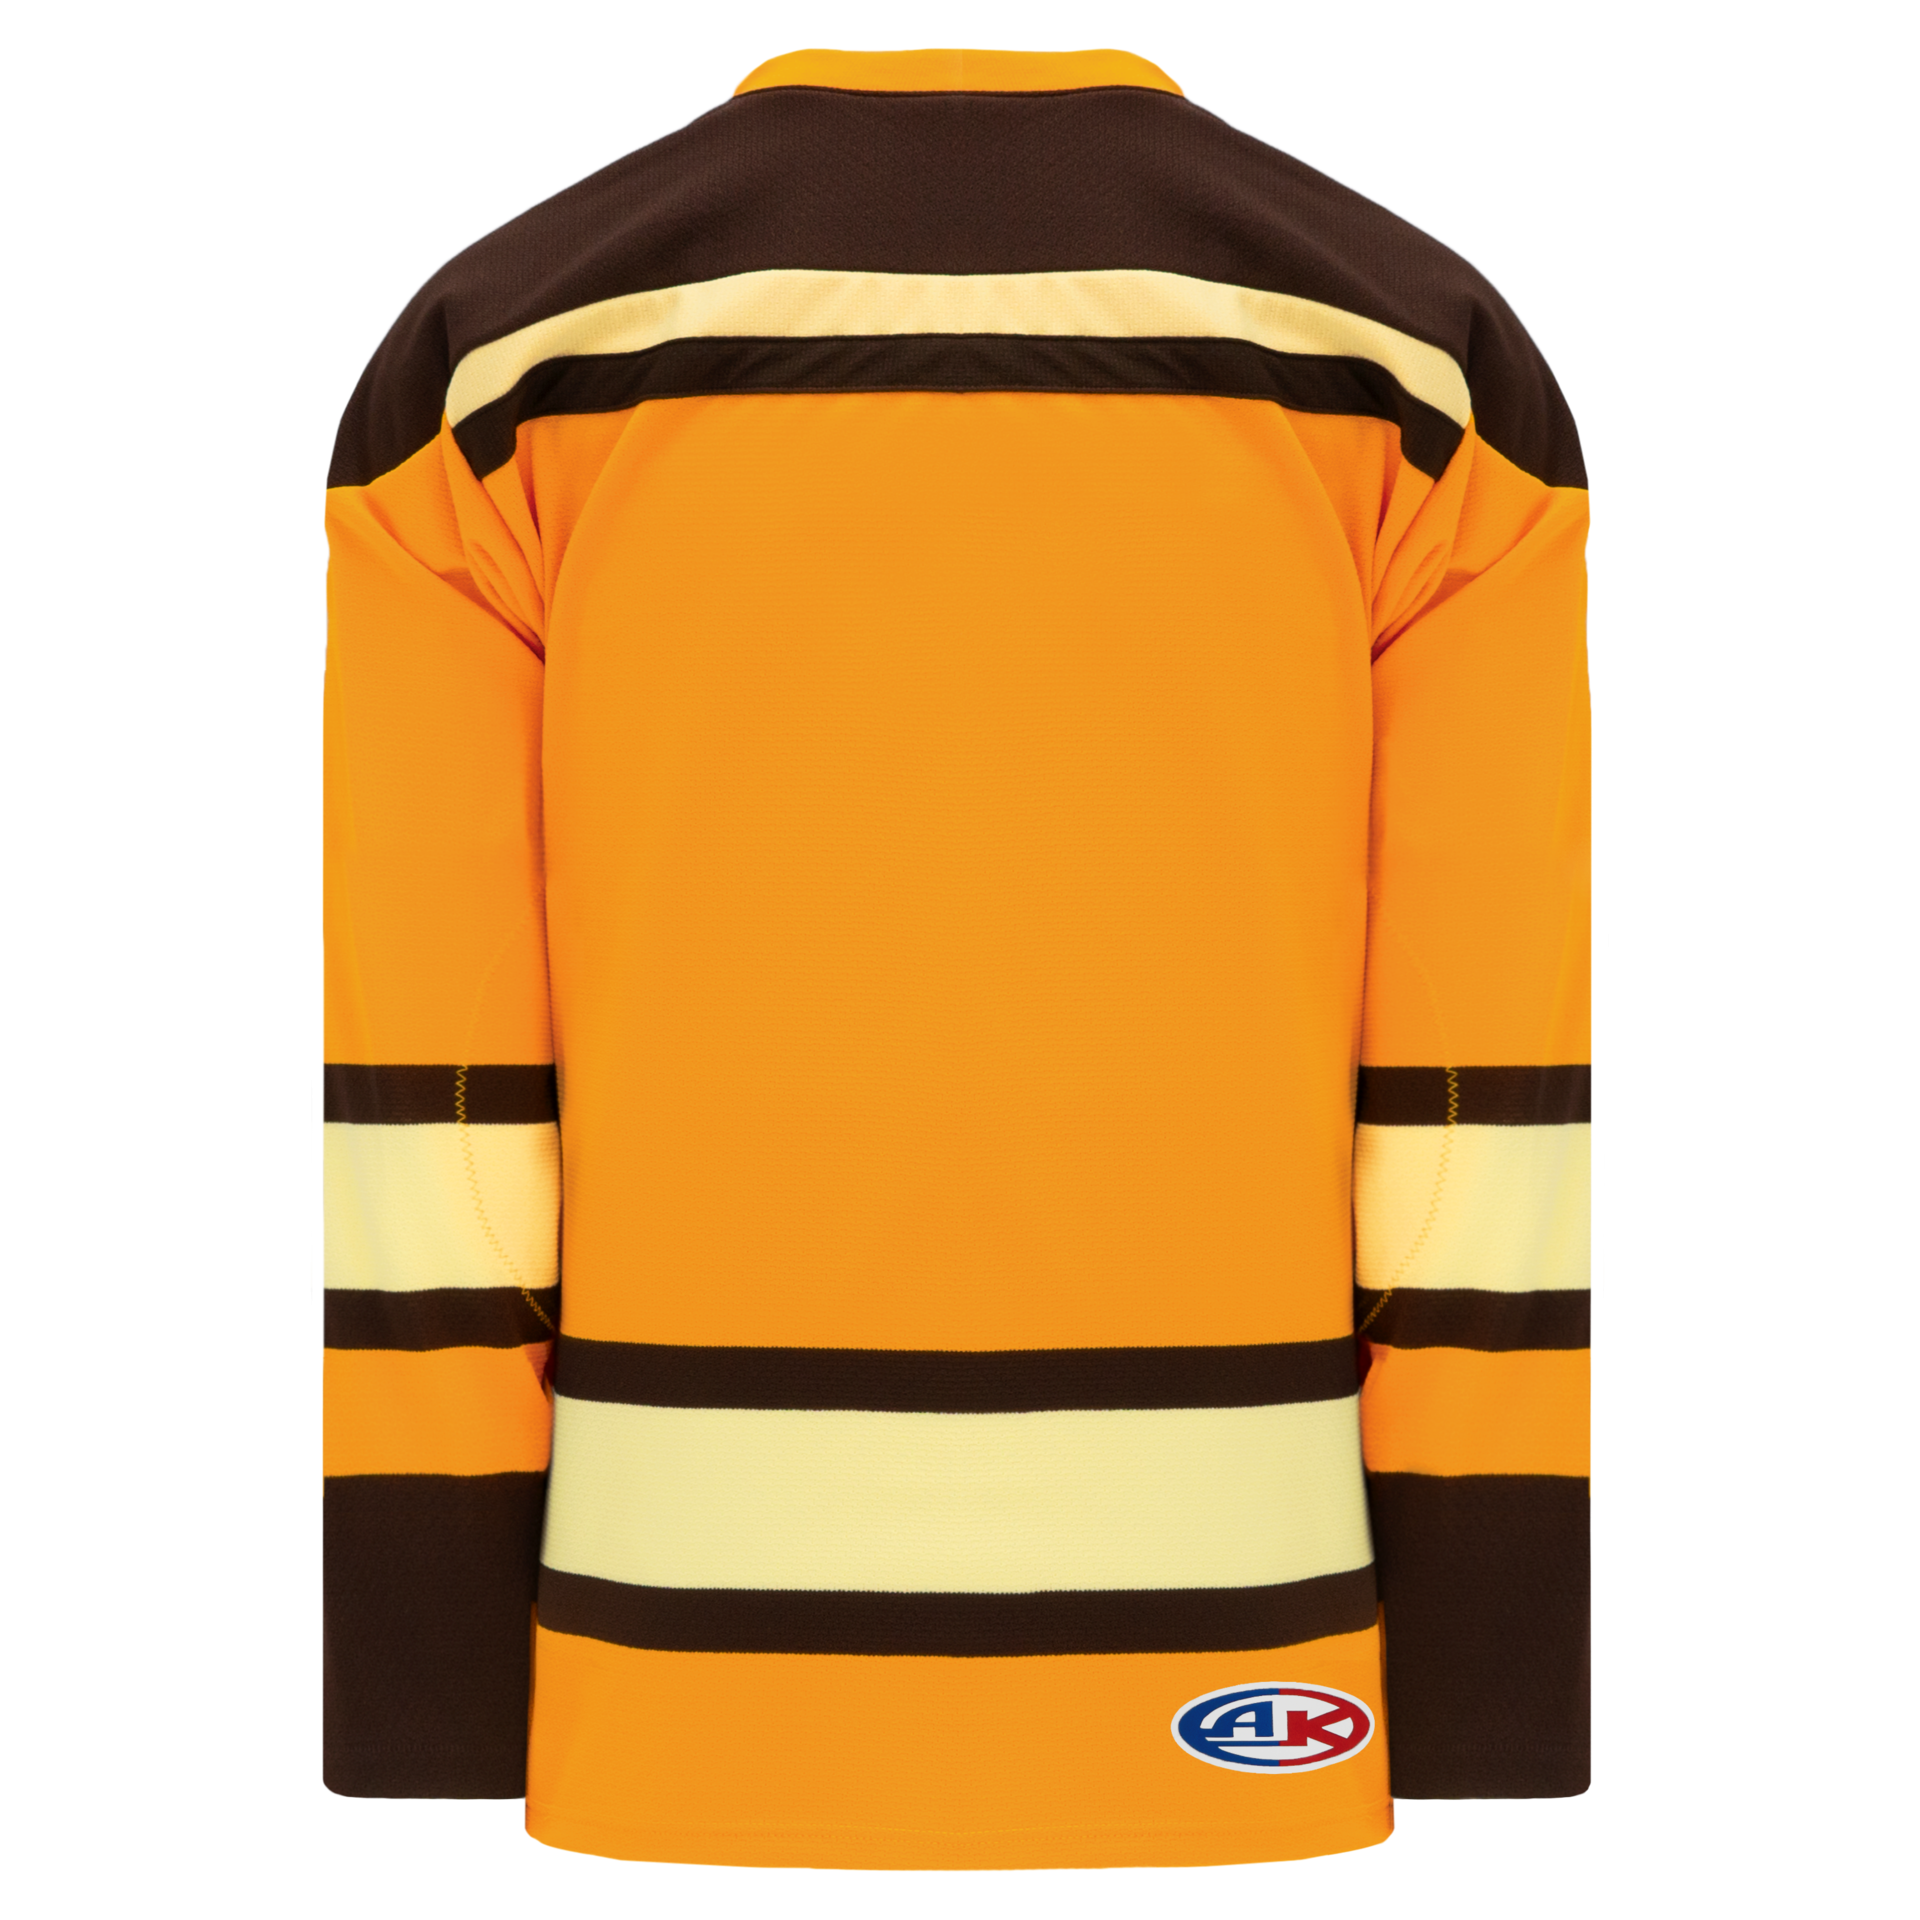 ✓SOLD✓Boston Bruins vintage sweater jersey medium